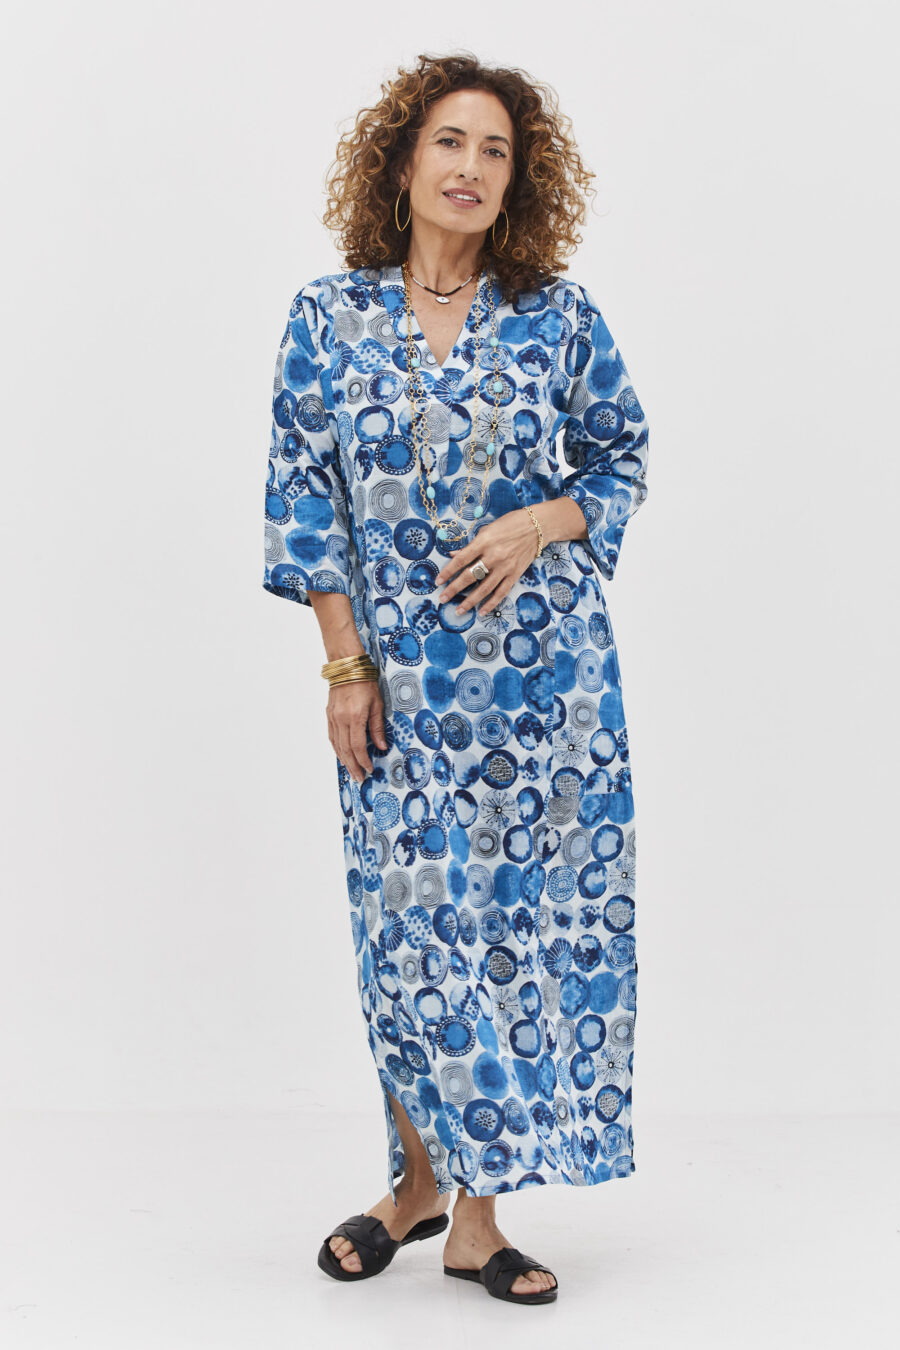 Jalabiya dress | Uniquely designed dress – Ocean print, white dress with blue sphere print.